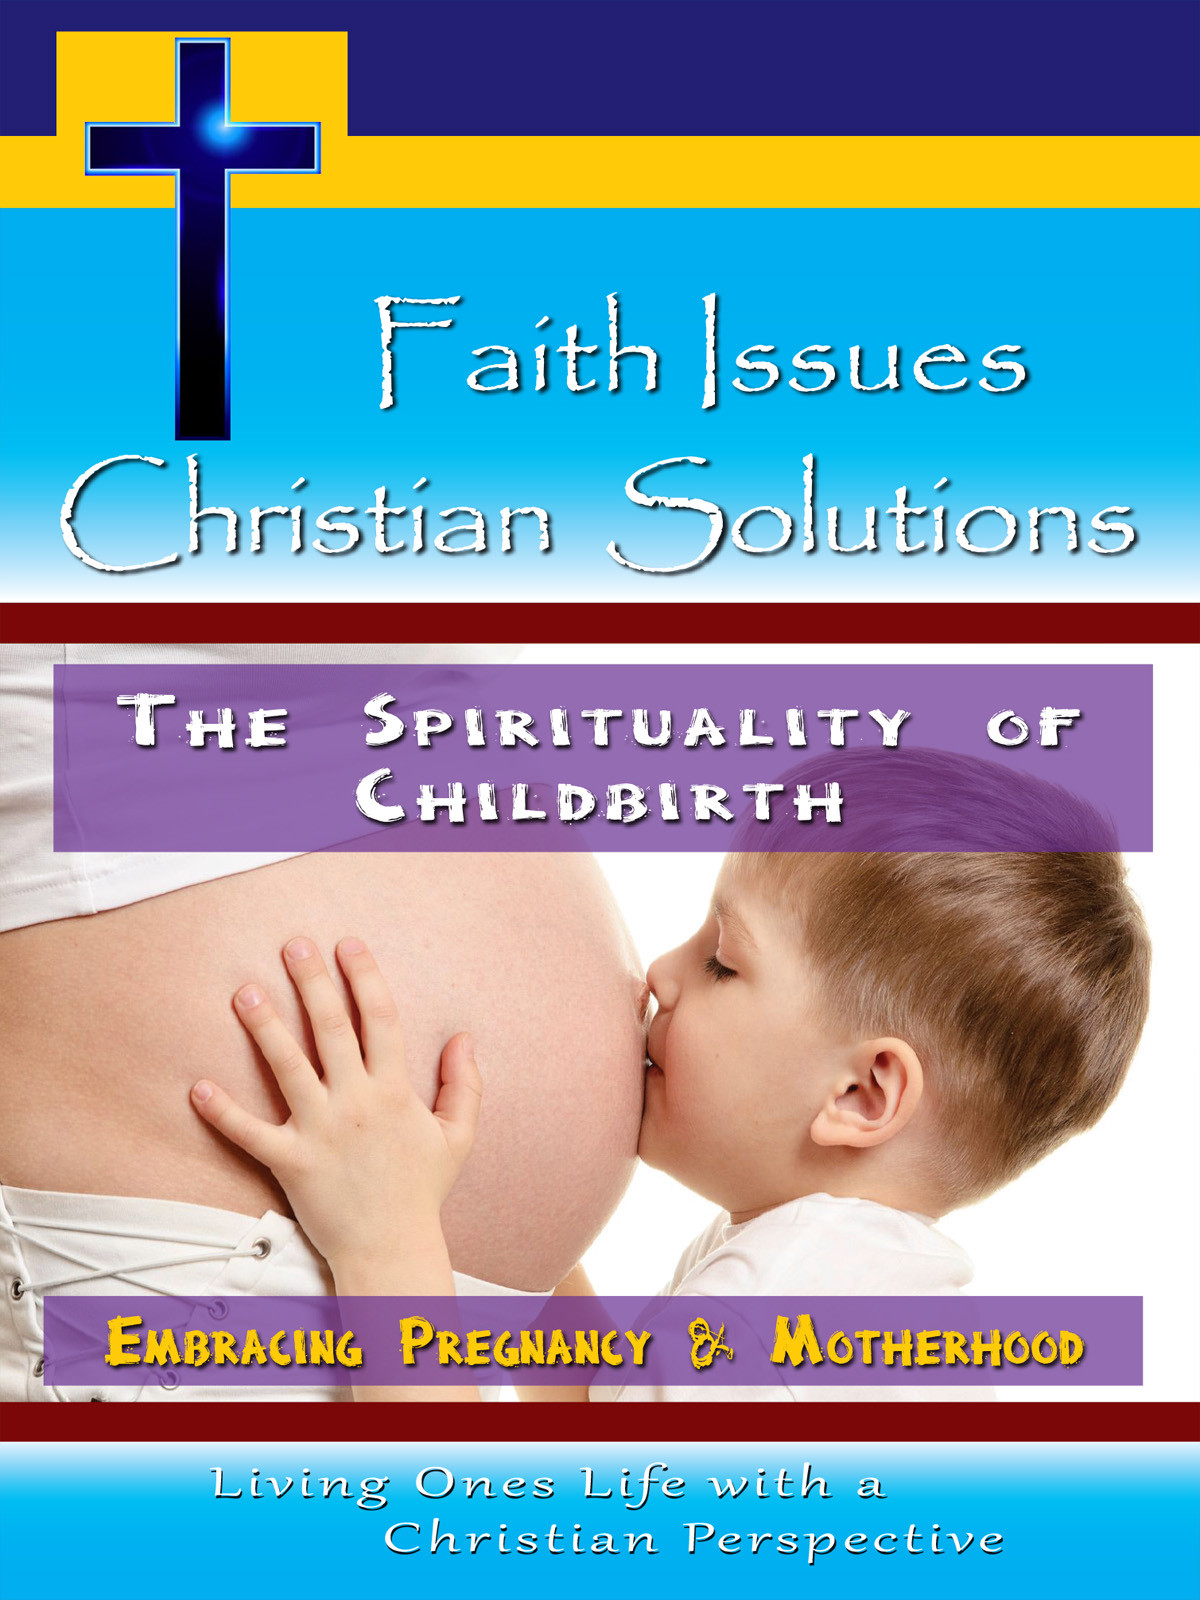 CH10034 - The Spirituality of Childbirth Embracing Pregnancy & Motherhood